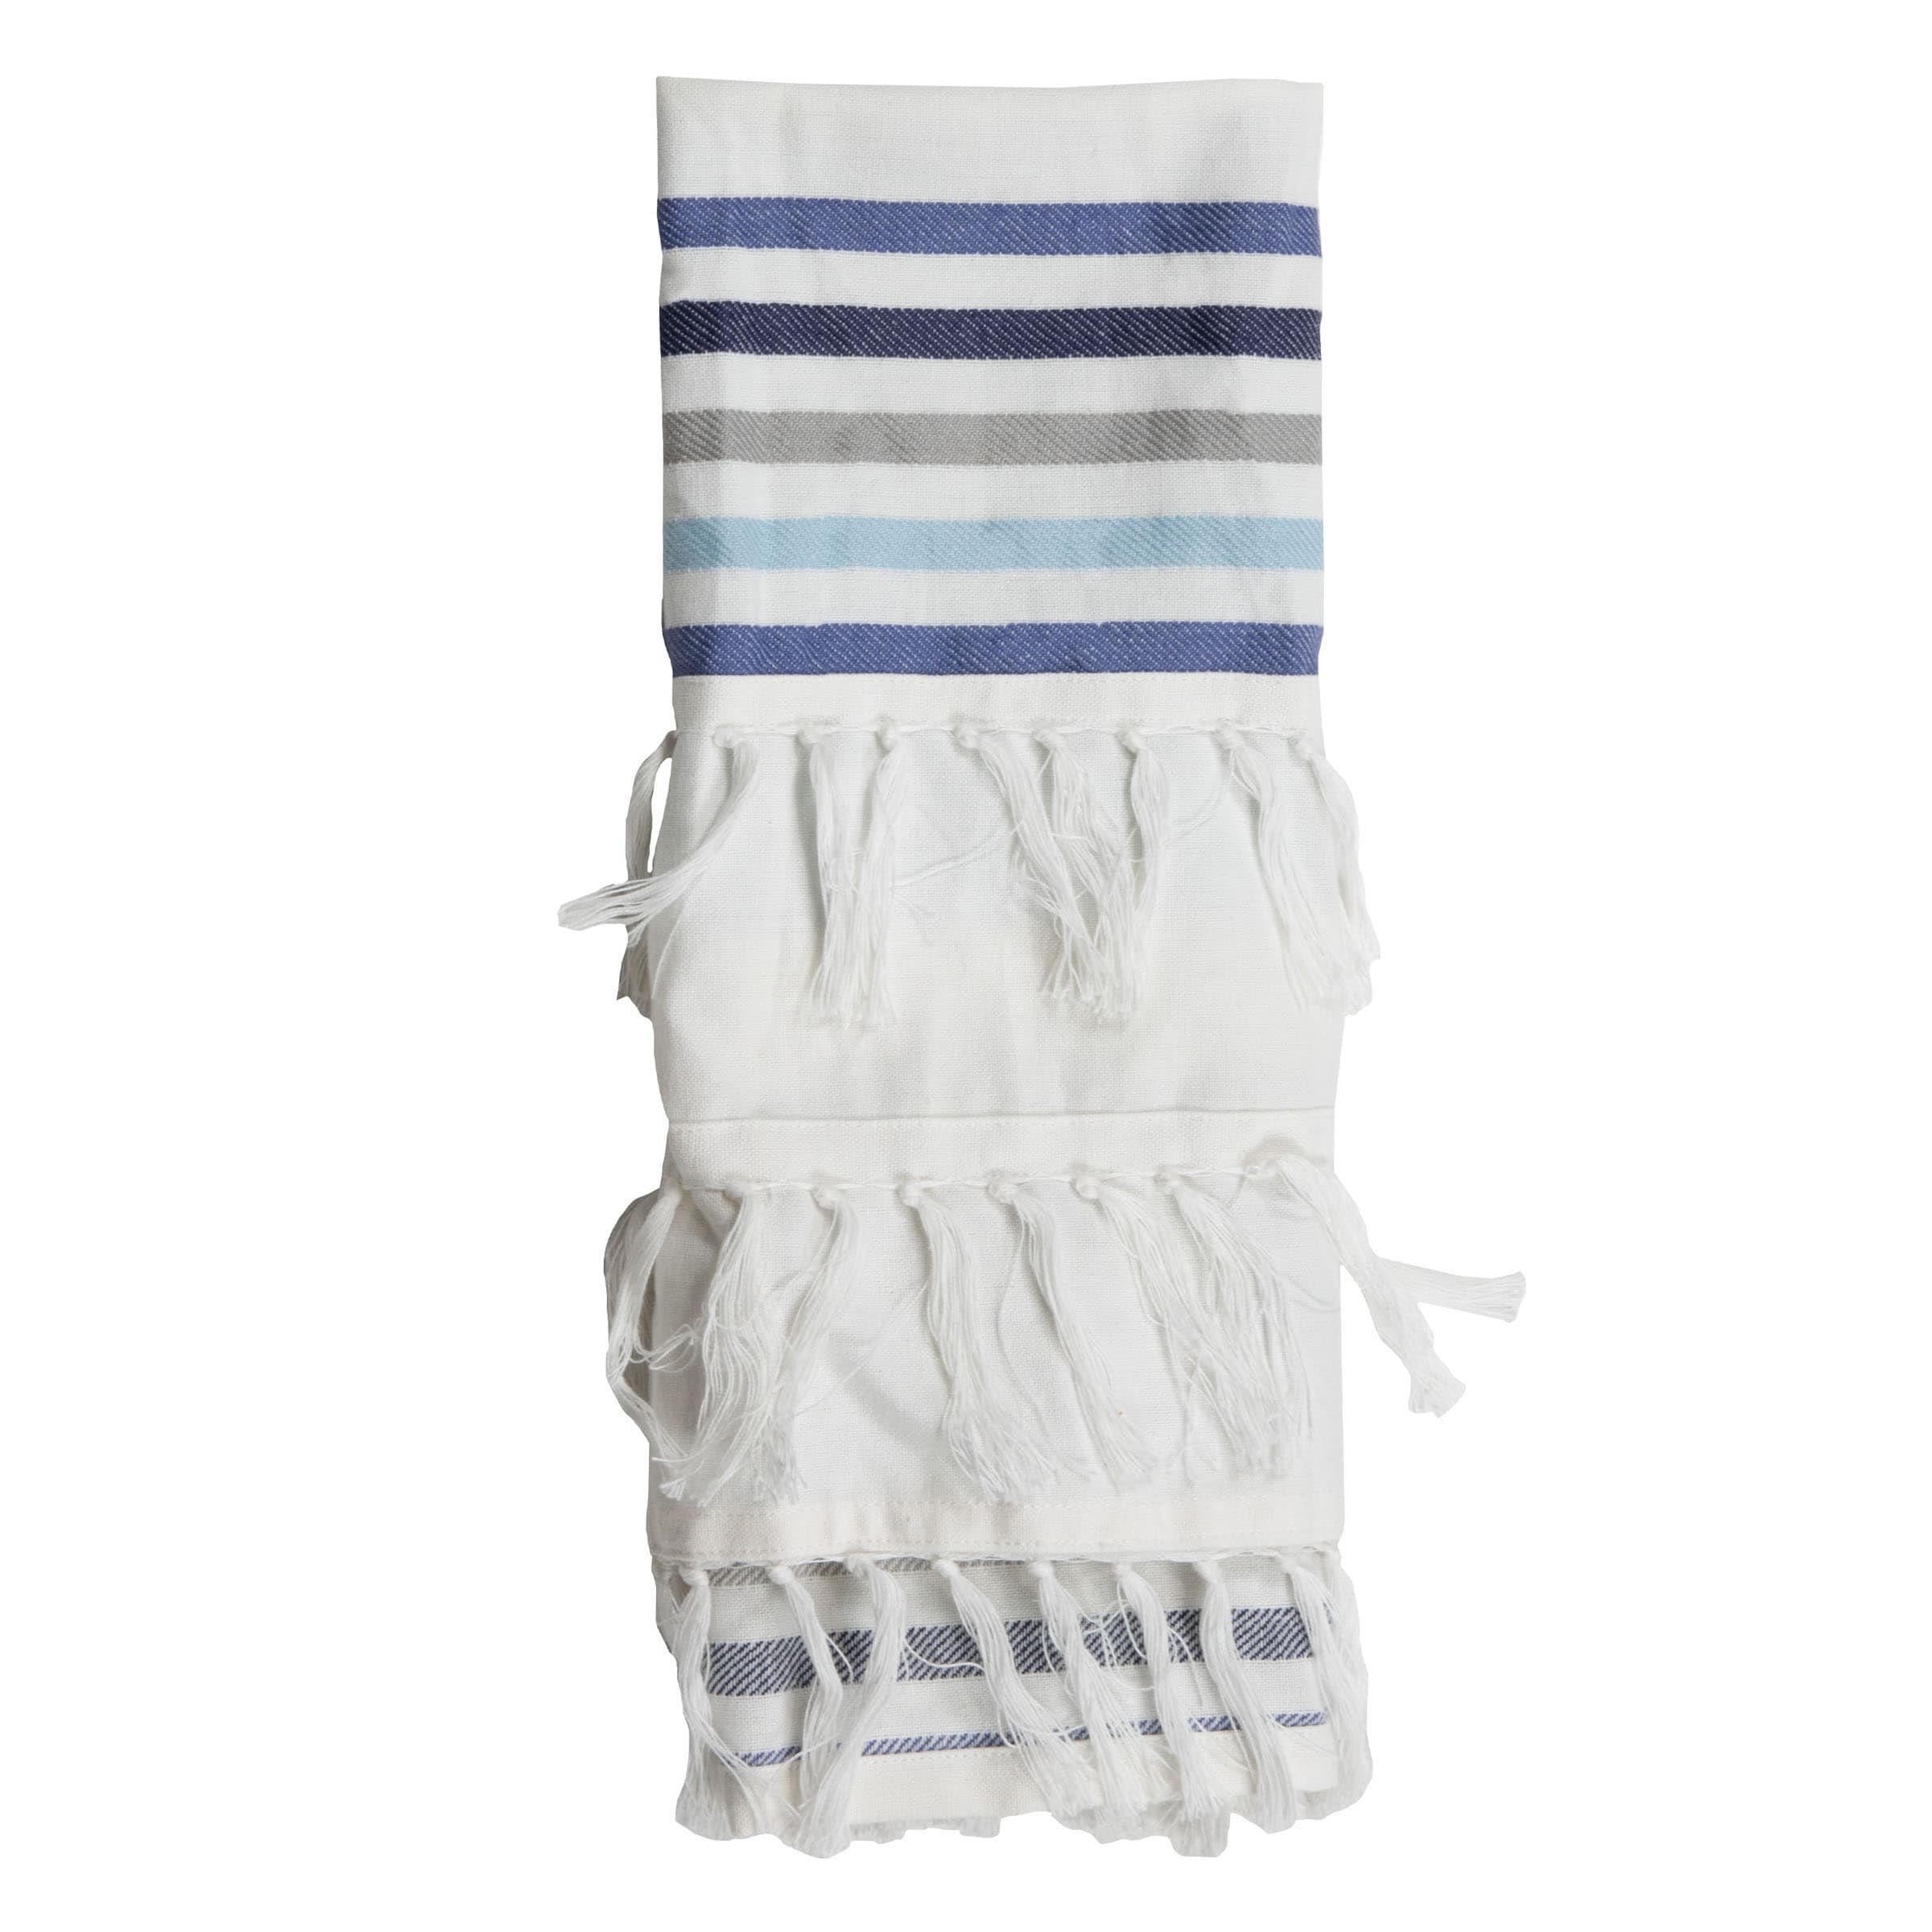 New 2-PK KitchenAid Cotton Terry Kitchen Towels Blue Multi Striped